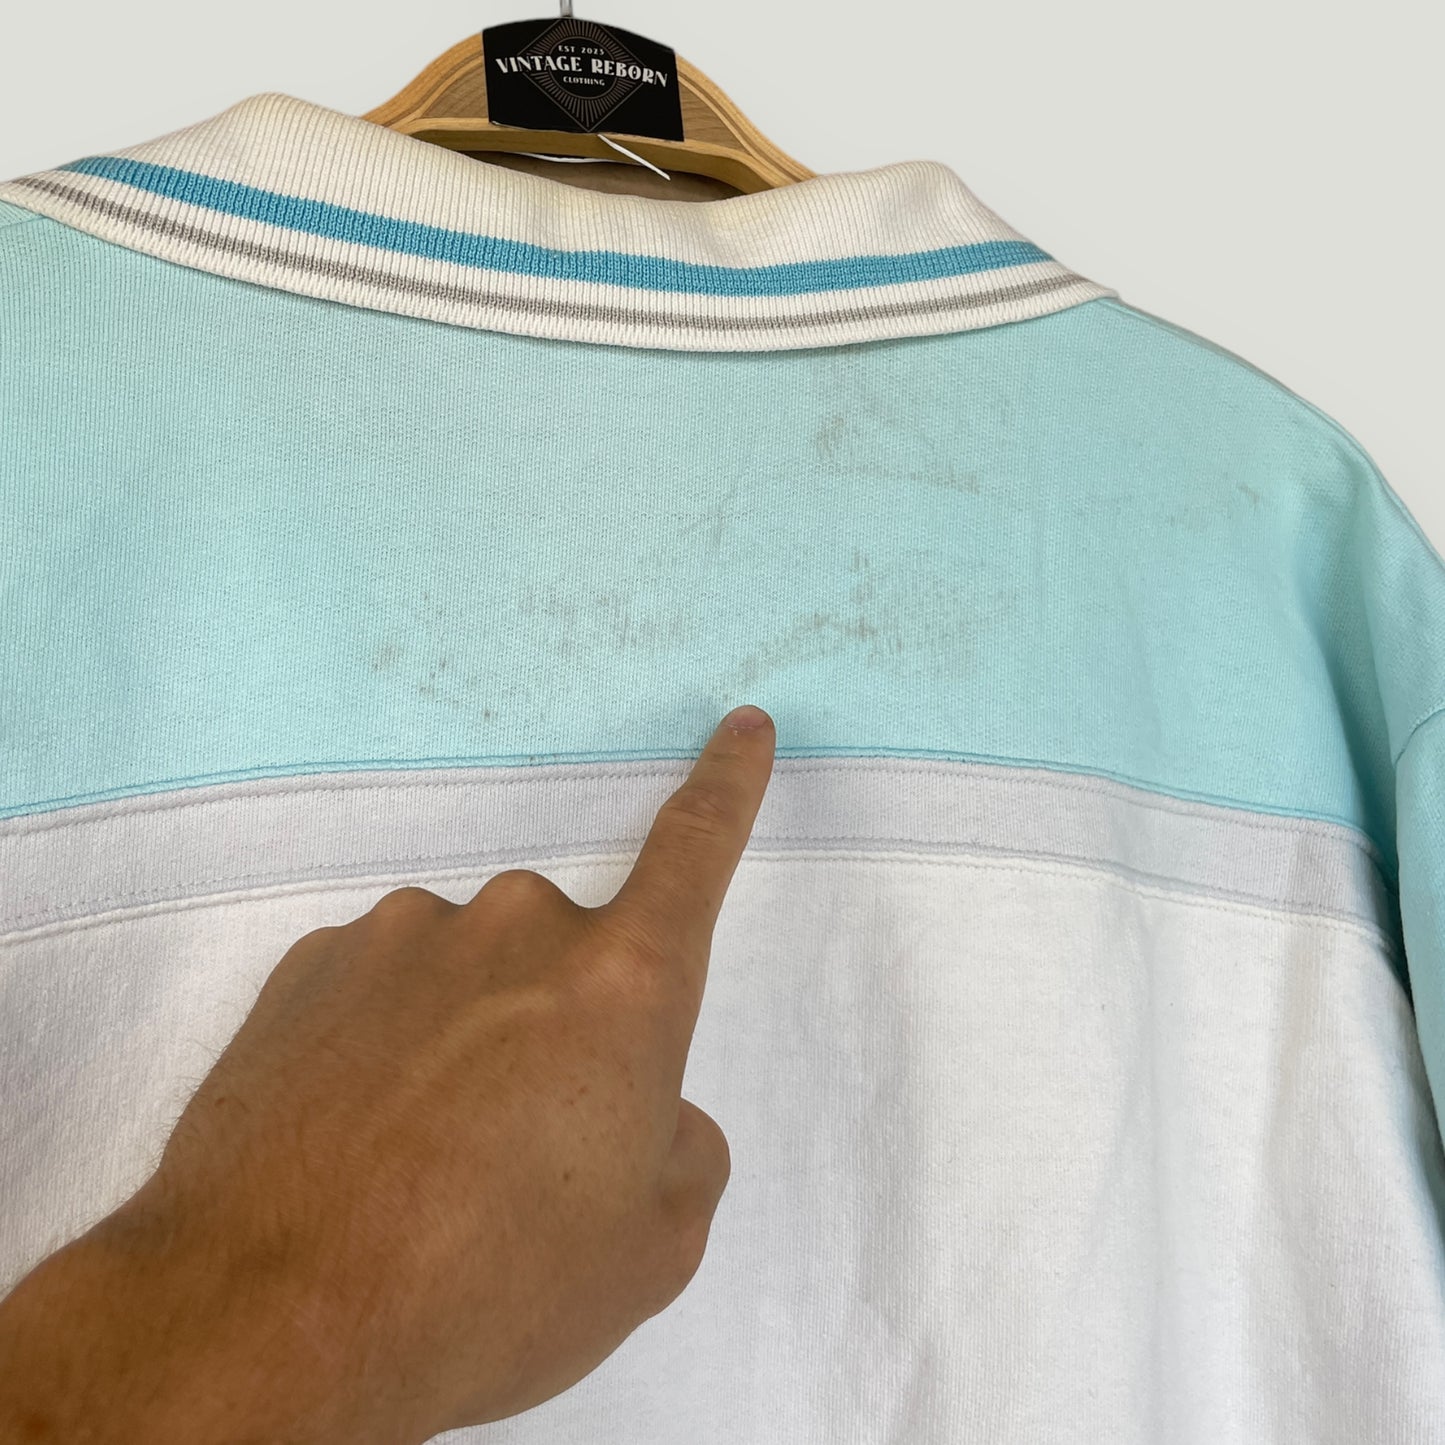 Malibu Polo Shirt Vintage - Vintage Reborn